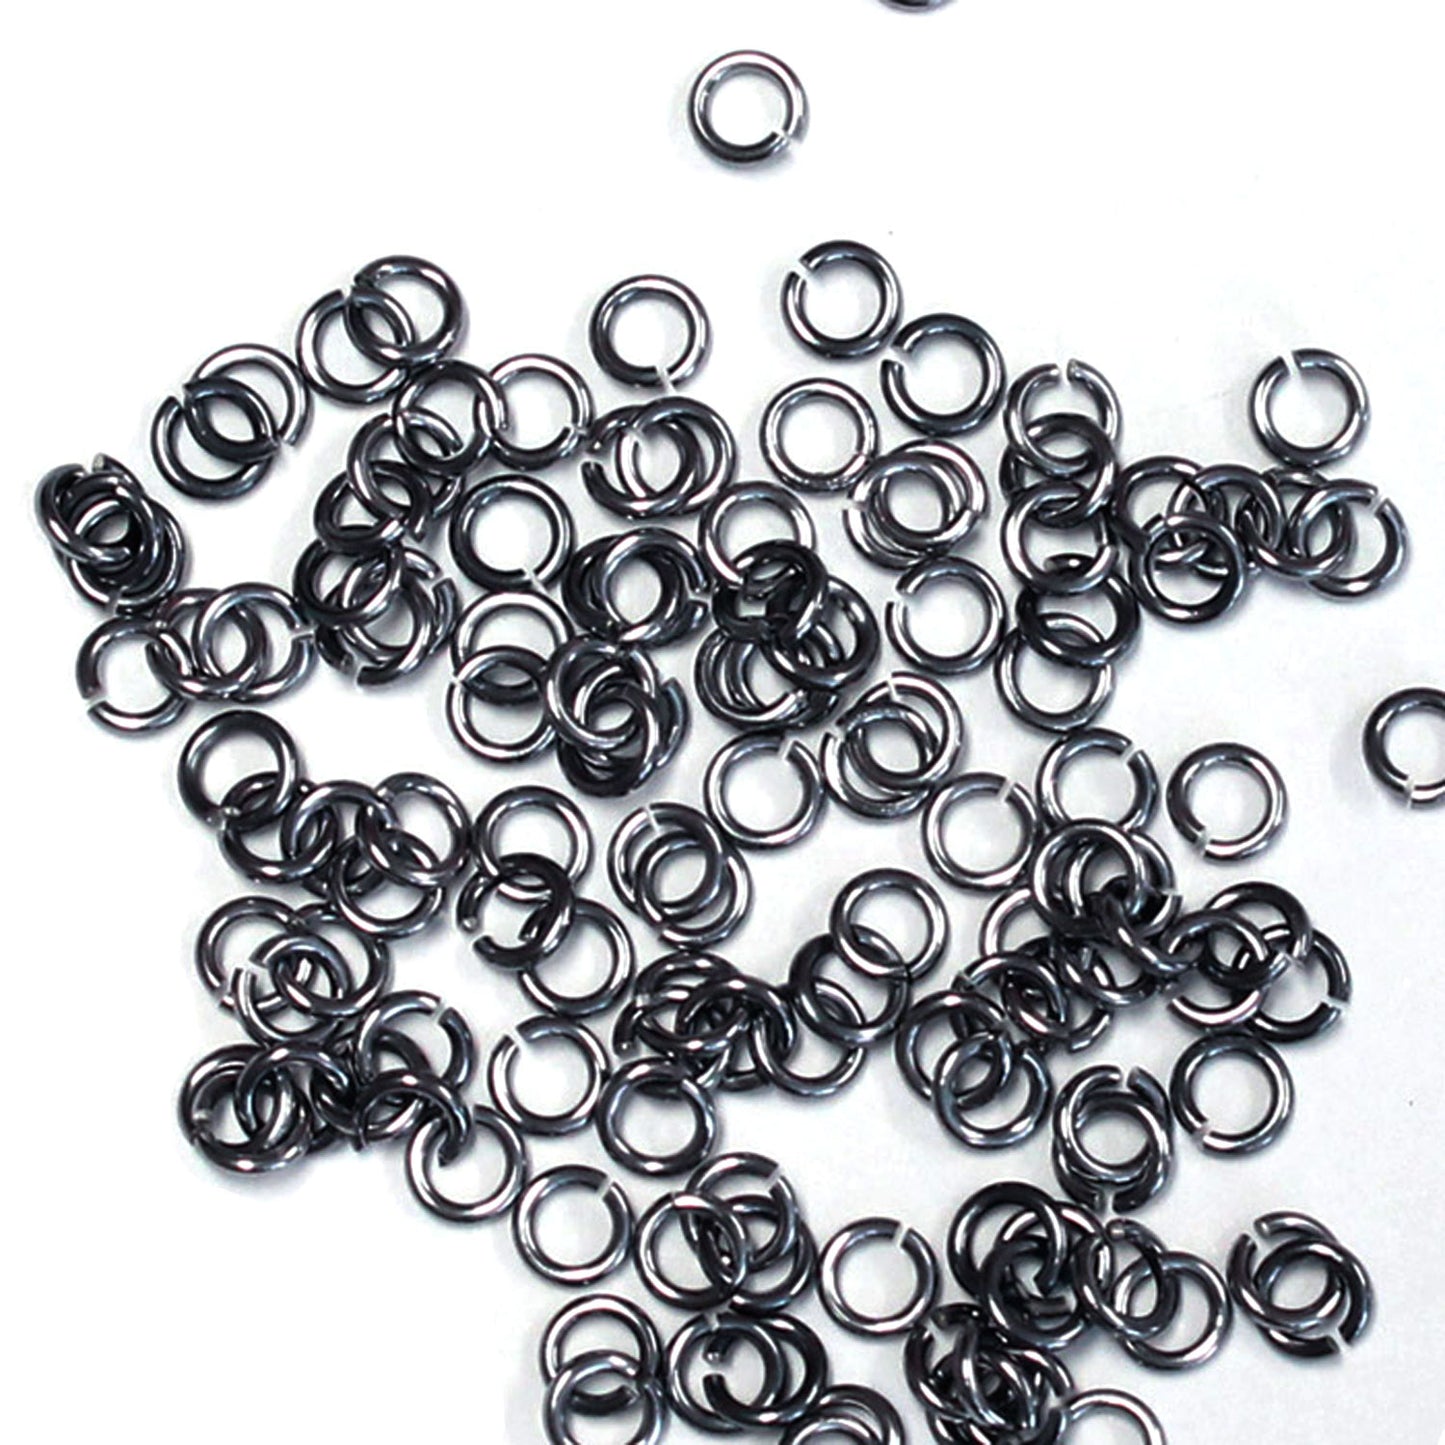 SHINY DARK BLACK ICE / 2.4mm 20 GA Jump Rings / 5 Gram Pack (approx 350) / sawcut round open anodized aluminum